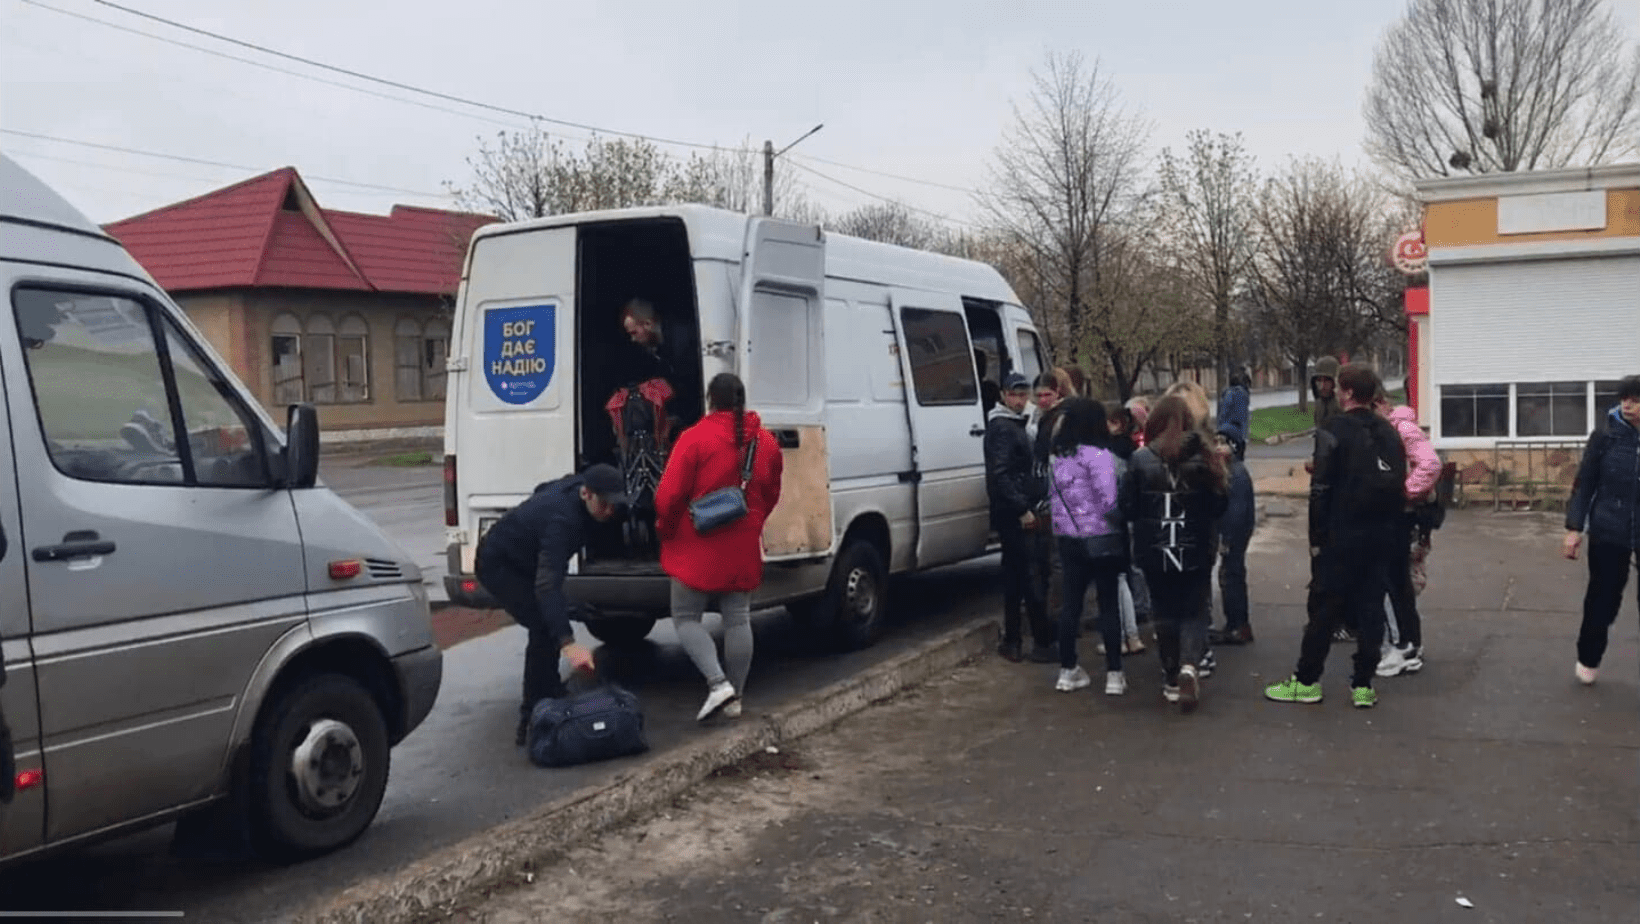 Ukrainians evacuating from eastern Ukraine in two vans